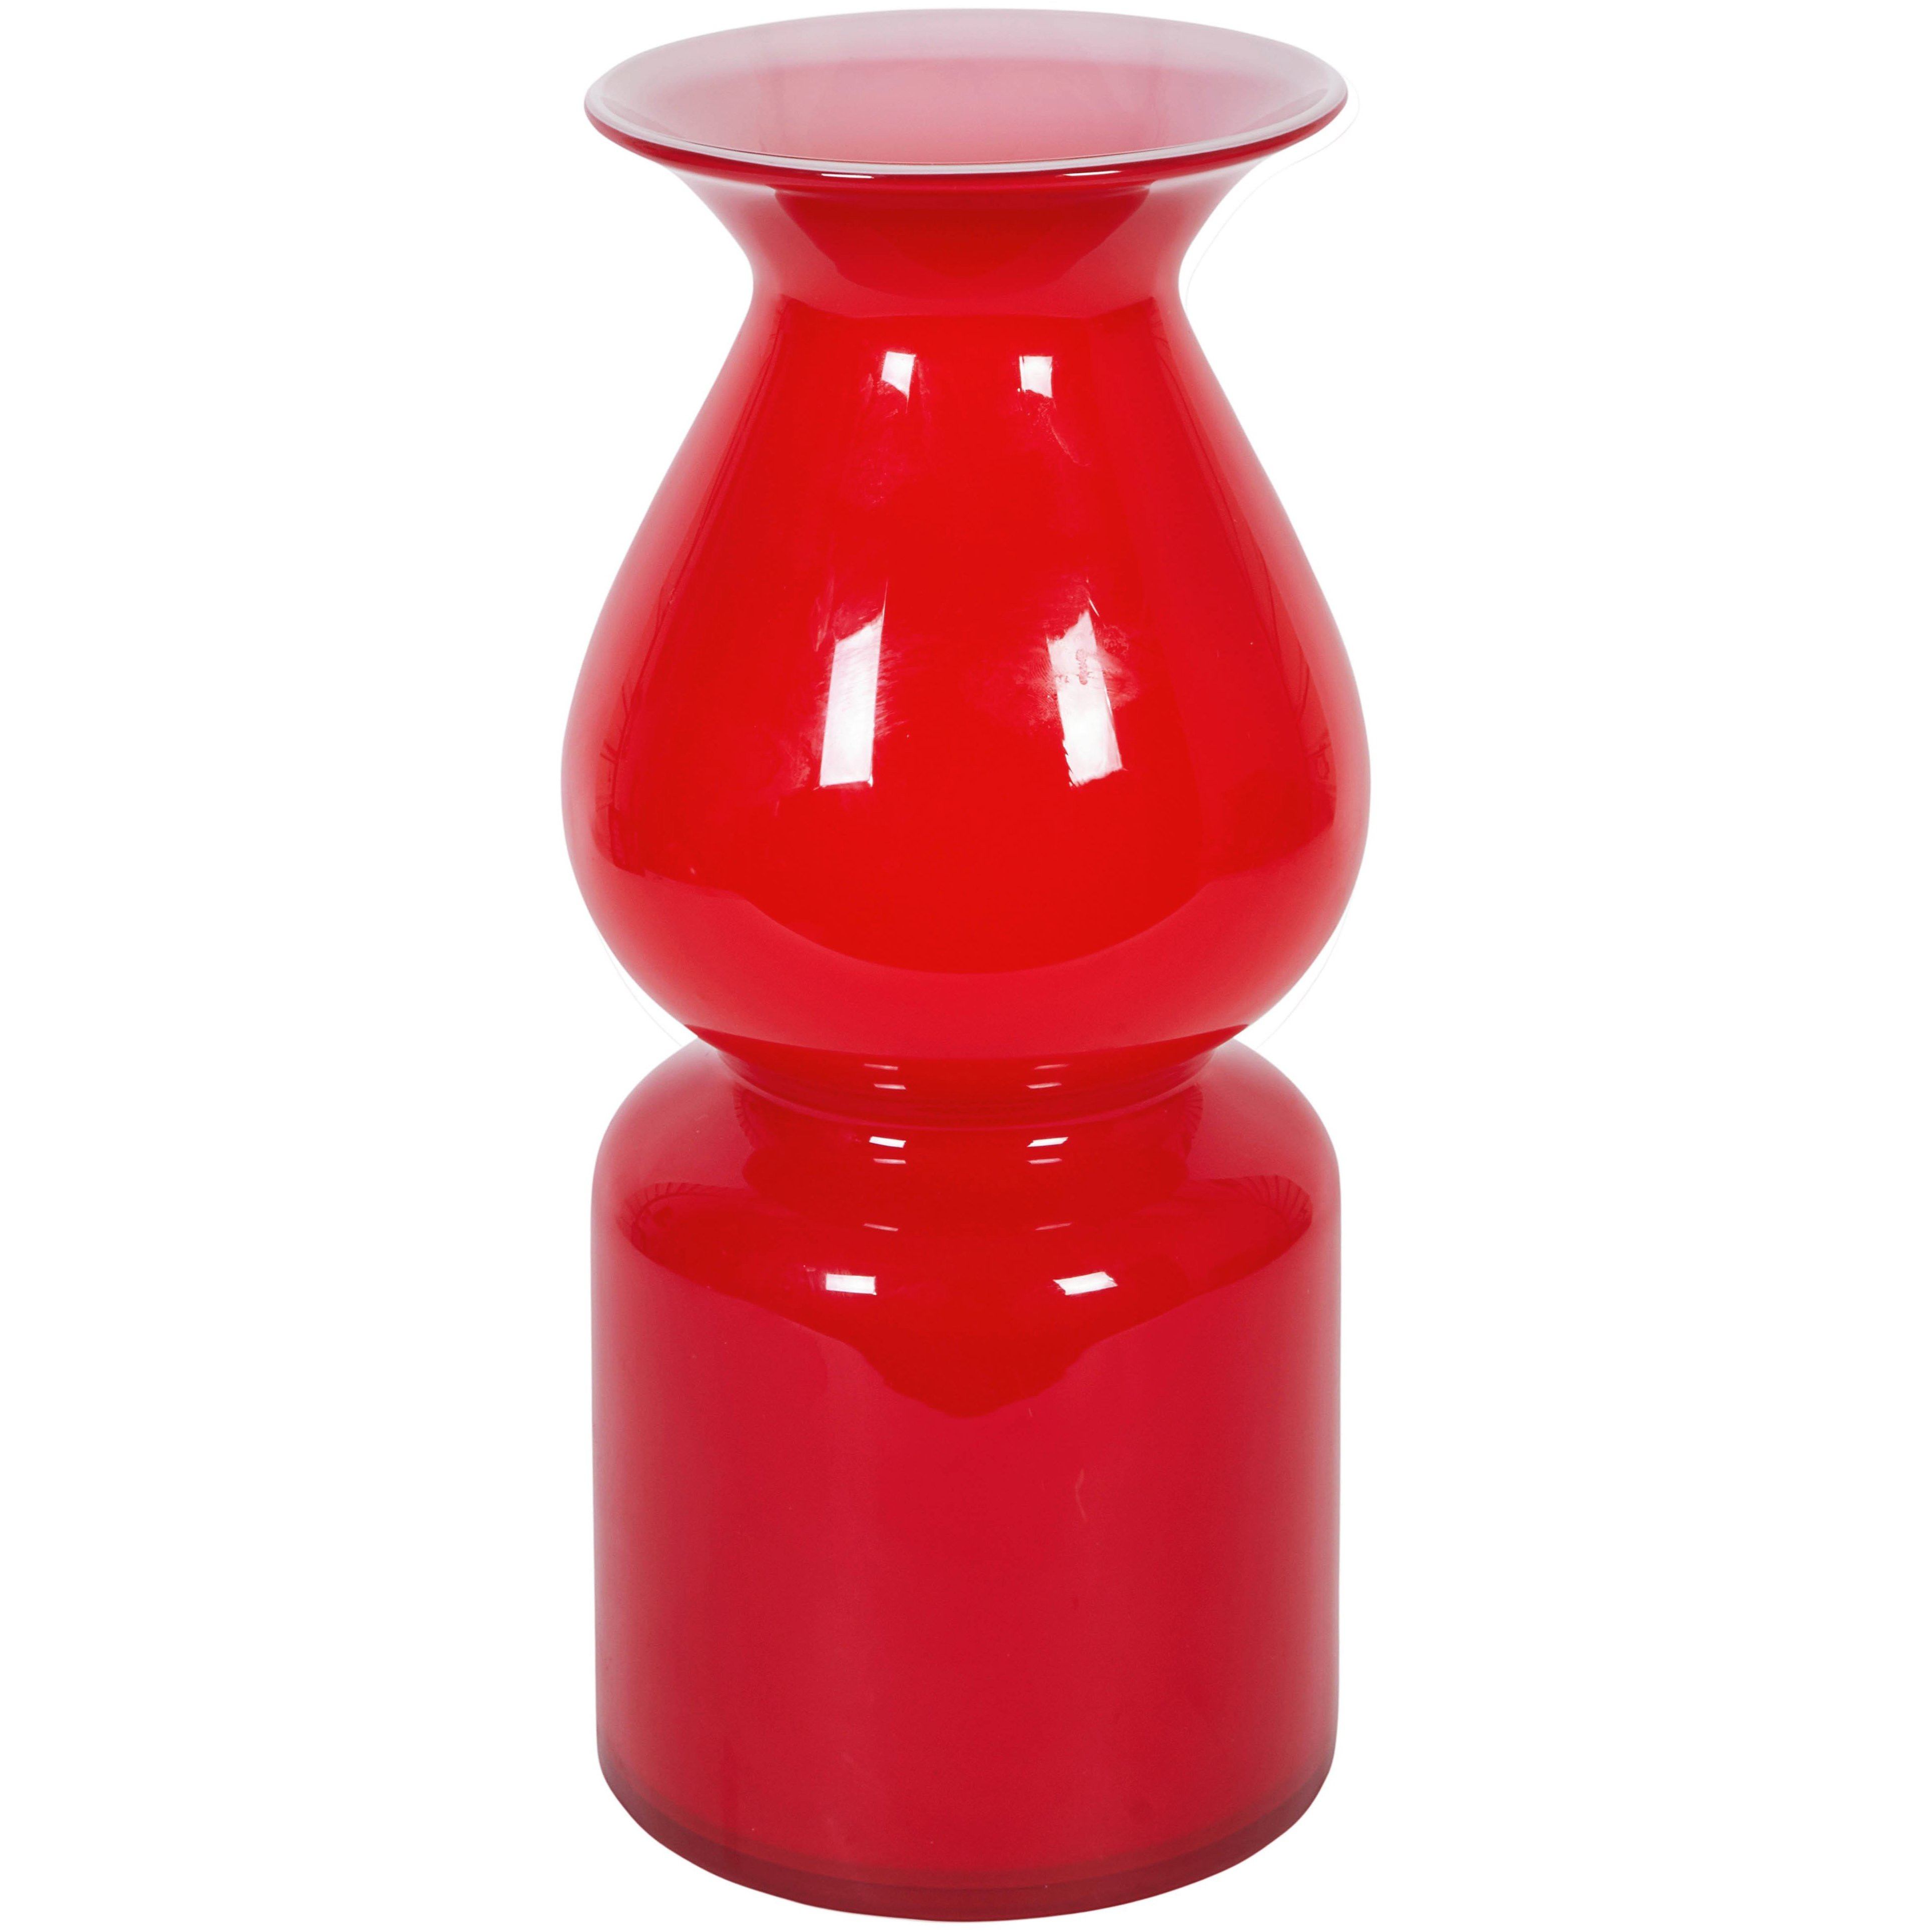 Kosta Boda Red Rim Vase Of Manner Of Per Lutken for Holmegaard Red Cased Carnaby Style Glass for Manner Of Per Lutken for Holmegaard Red Cased Carnaby Style Glass Vase at 1stdibs